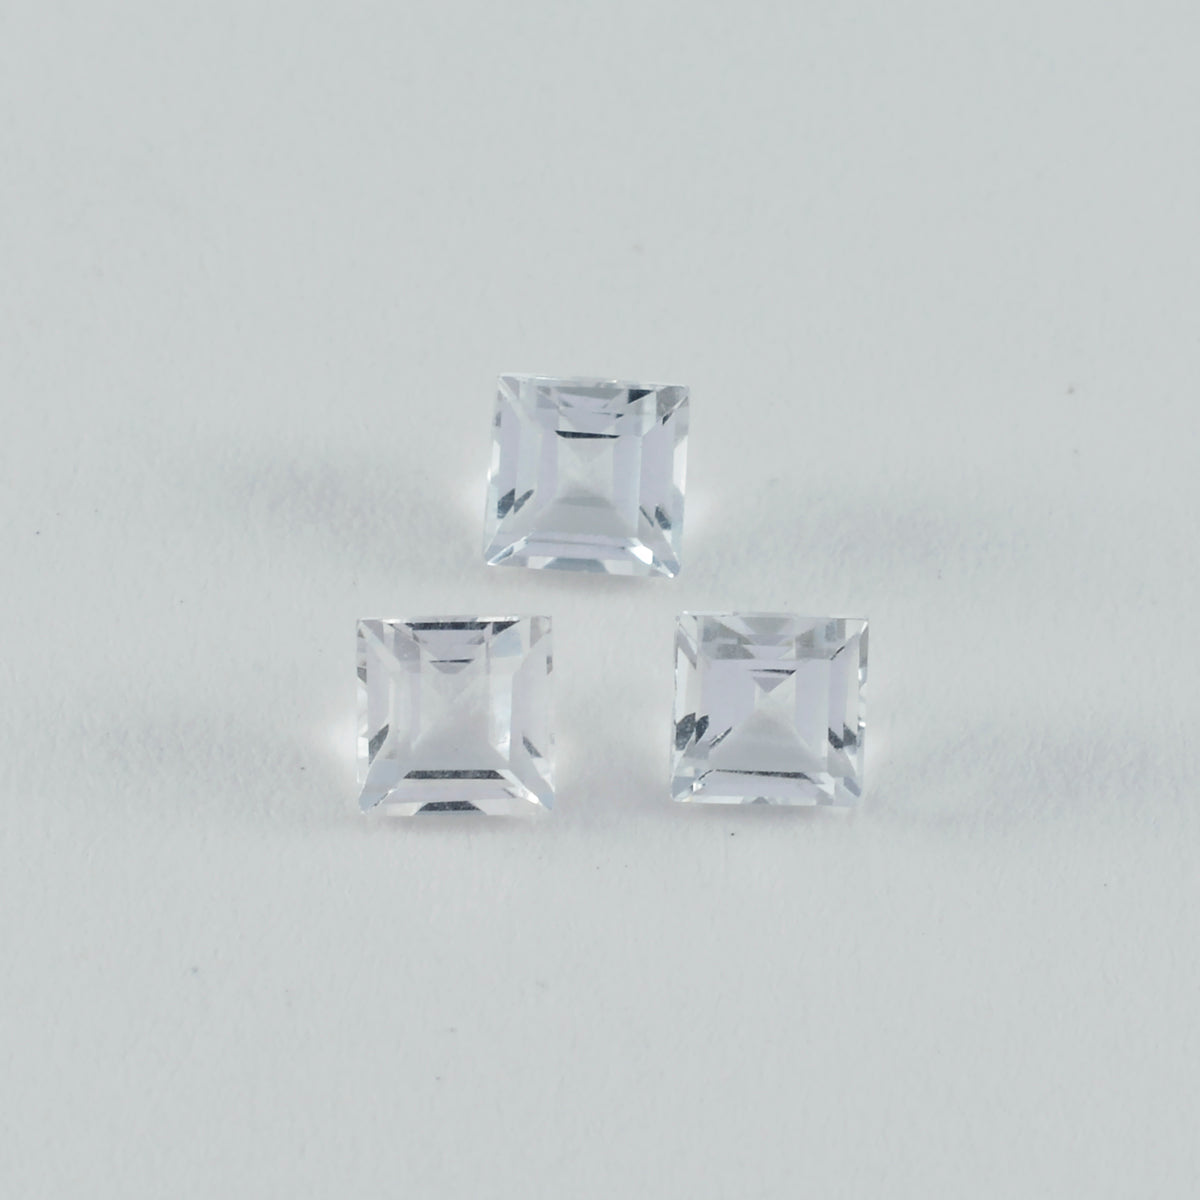 Riyogems 1PC wit kristalkwarts gefacetteerd 5x5 mm vierkante vorm mooie kwaliteit losse edelstenen